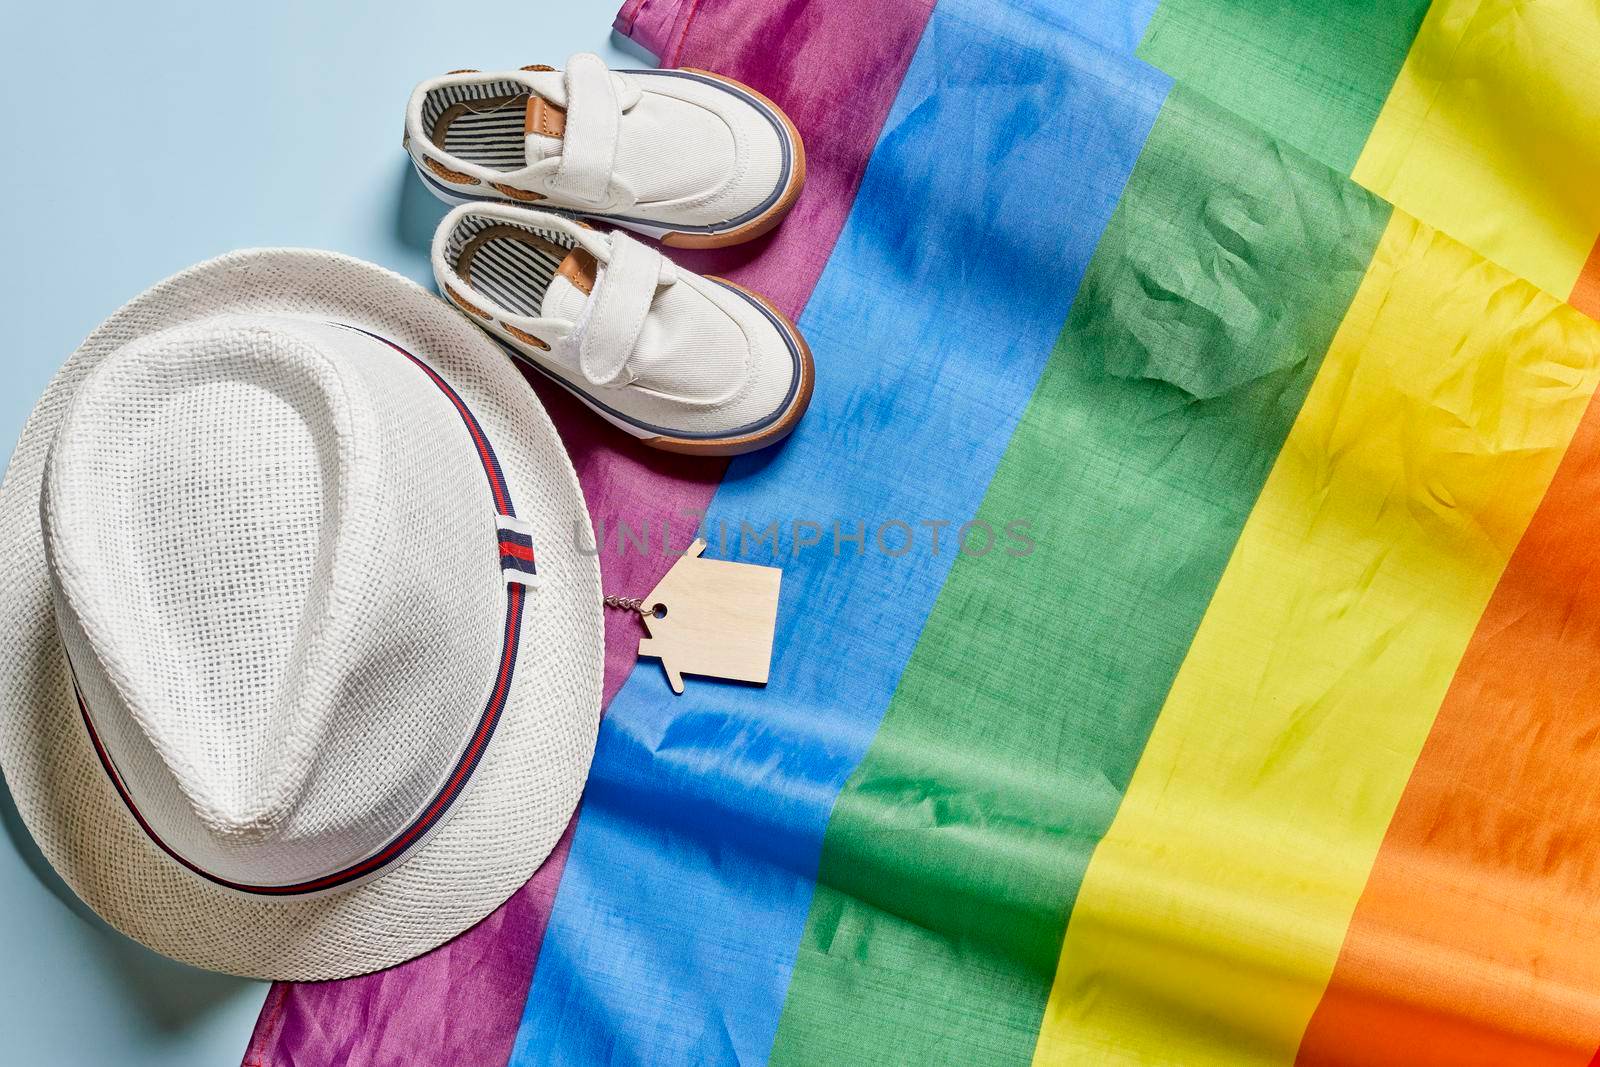 Travel hat, summer shoes and home keys on LBGTQ rainbow flag